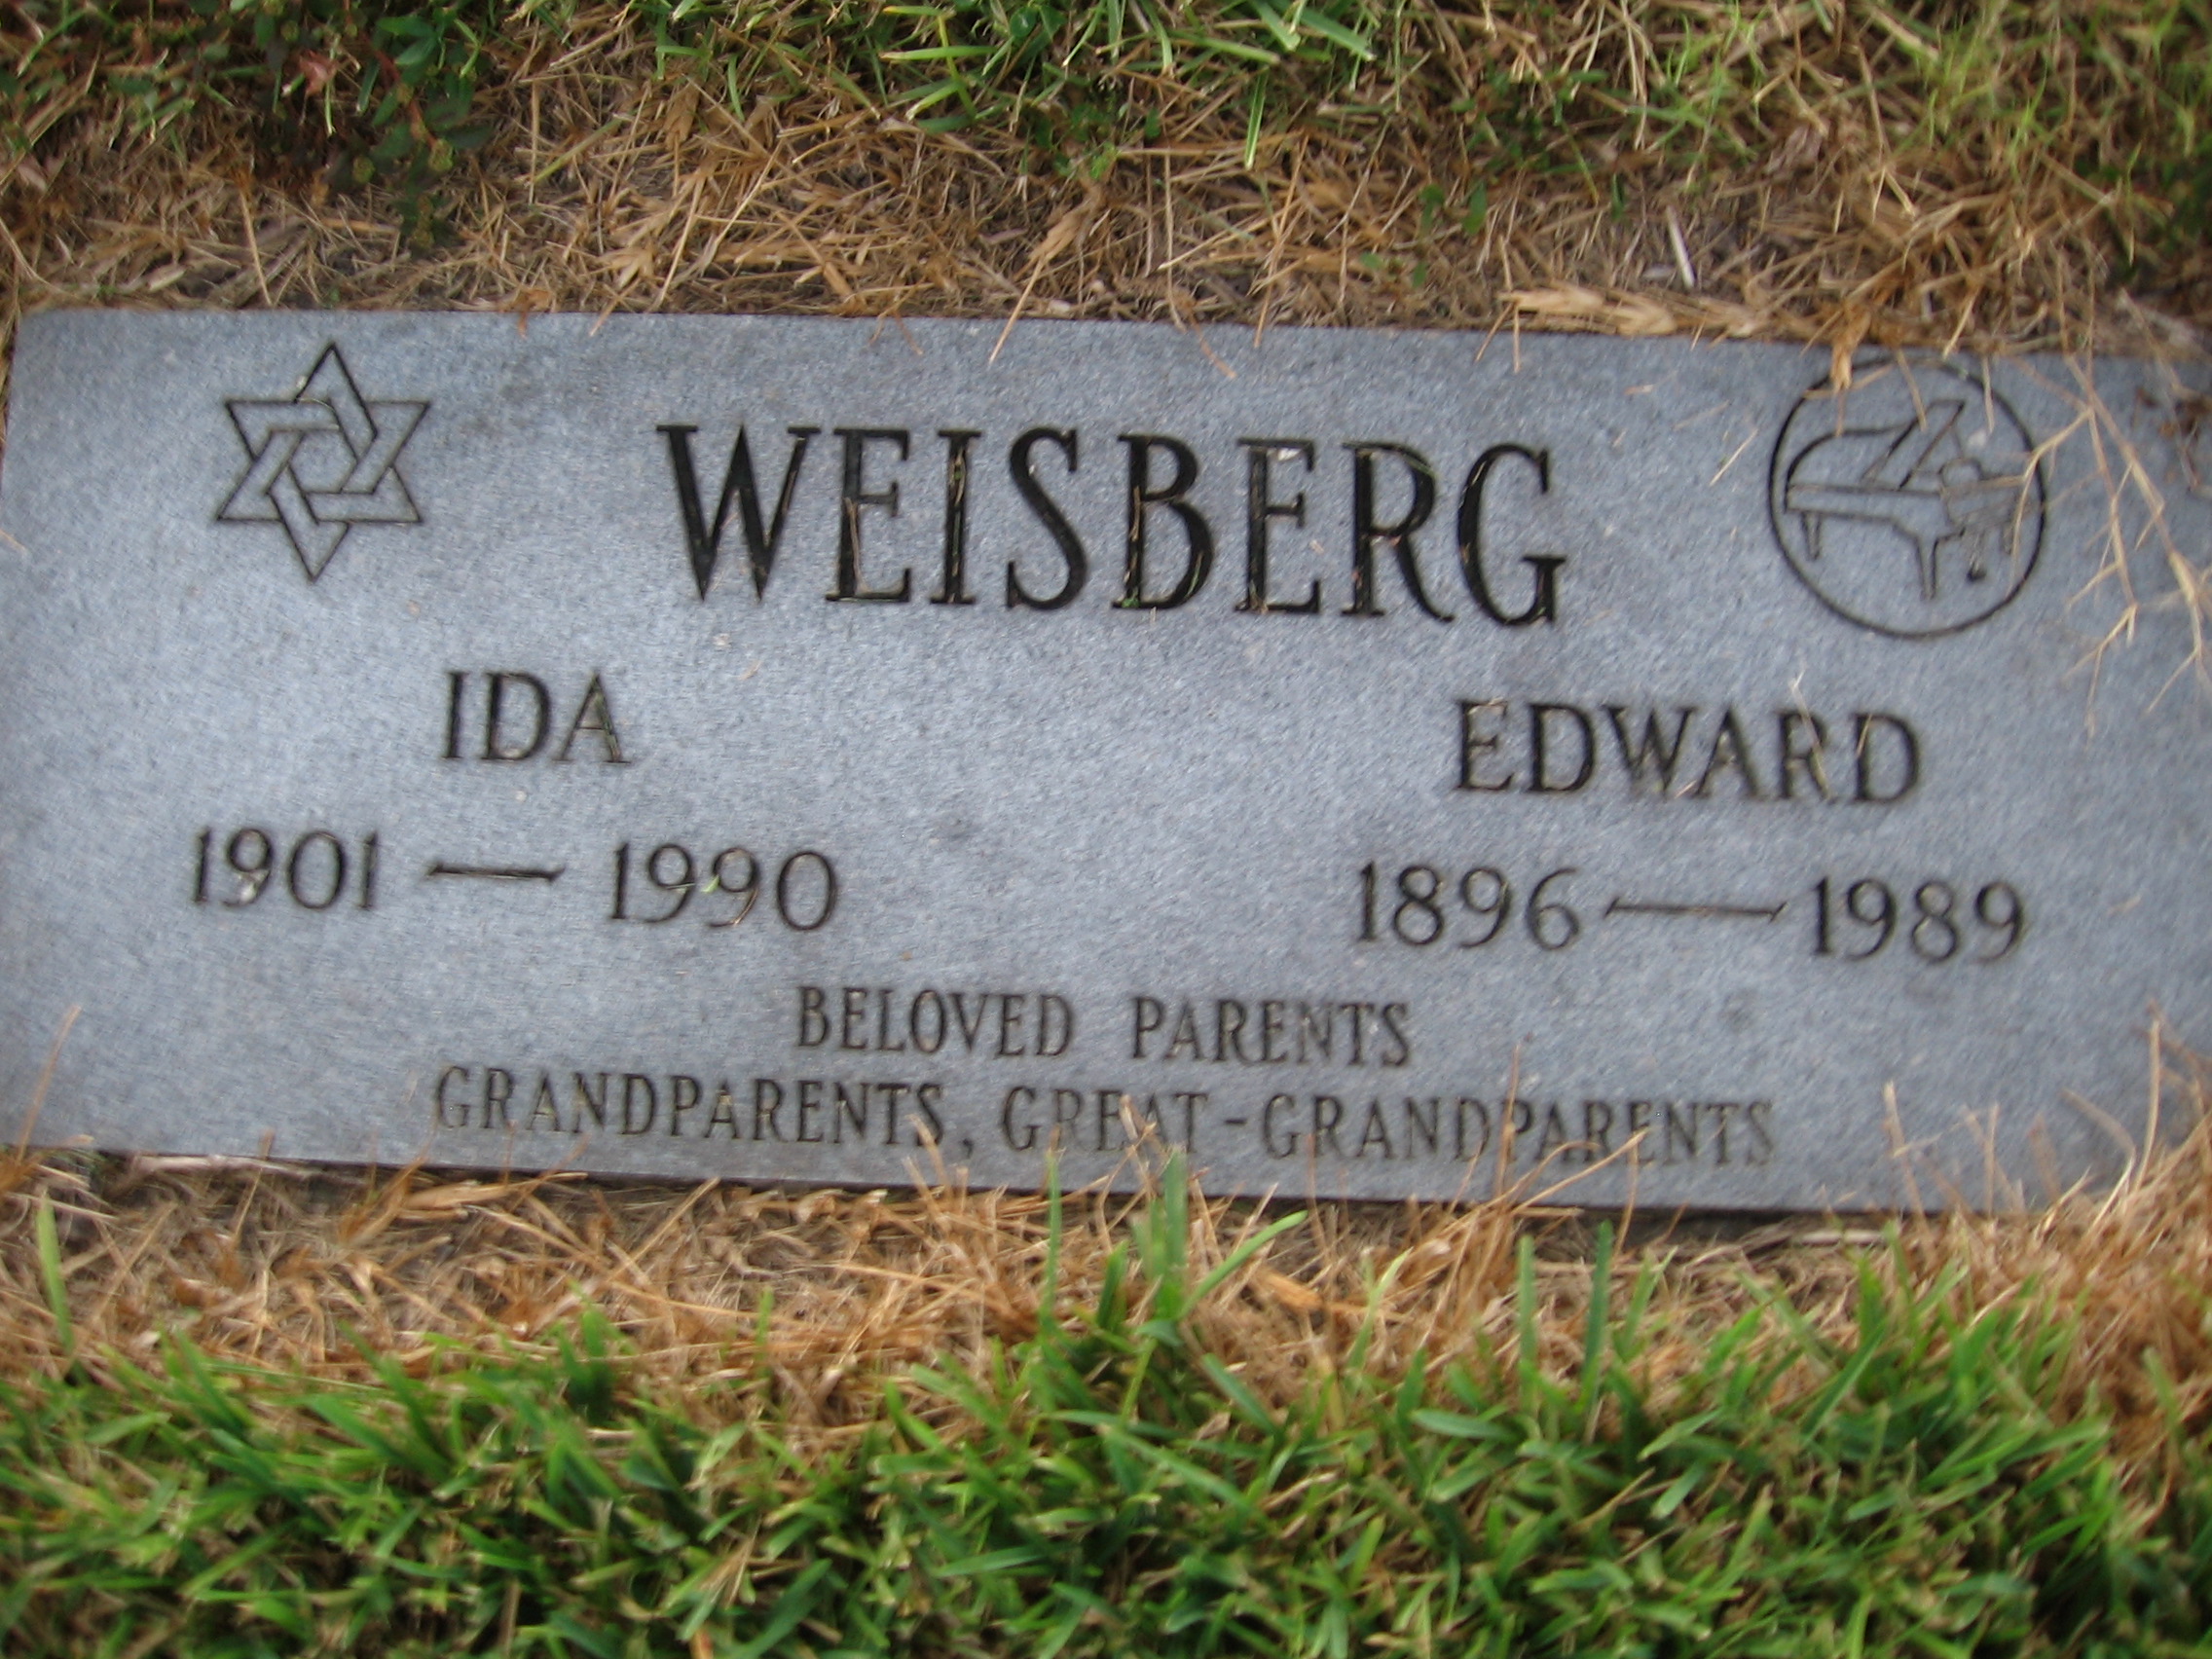 Edward Weisberg